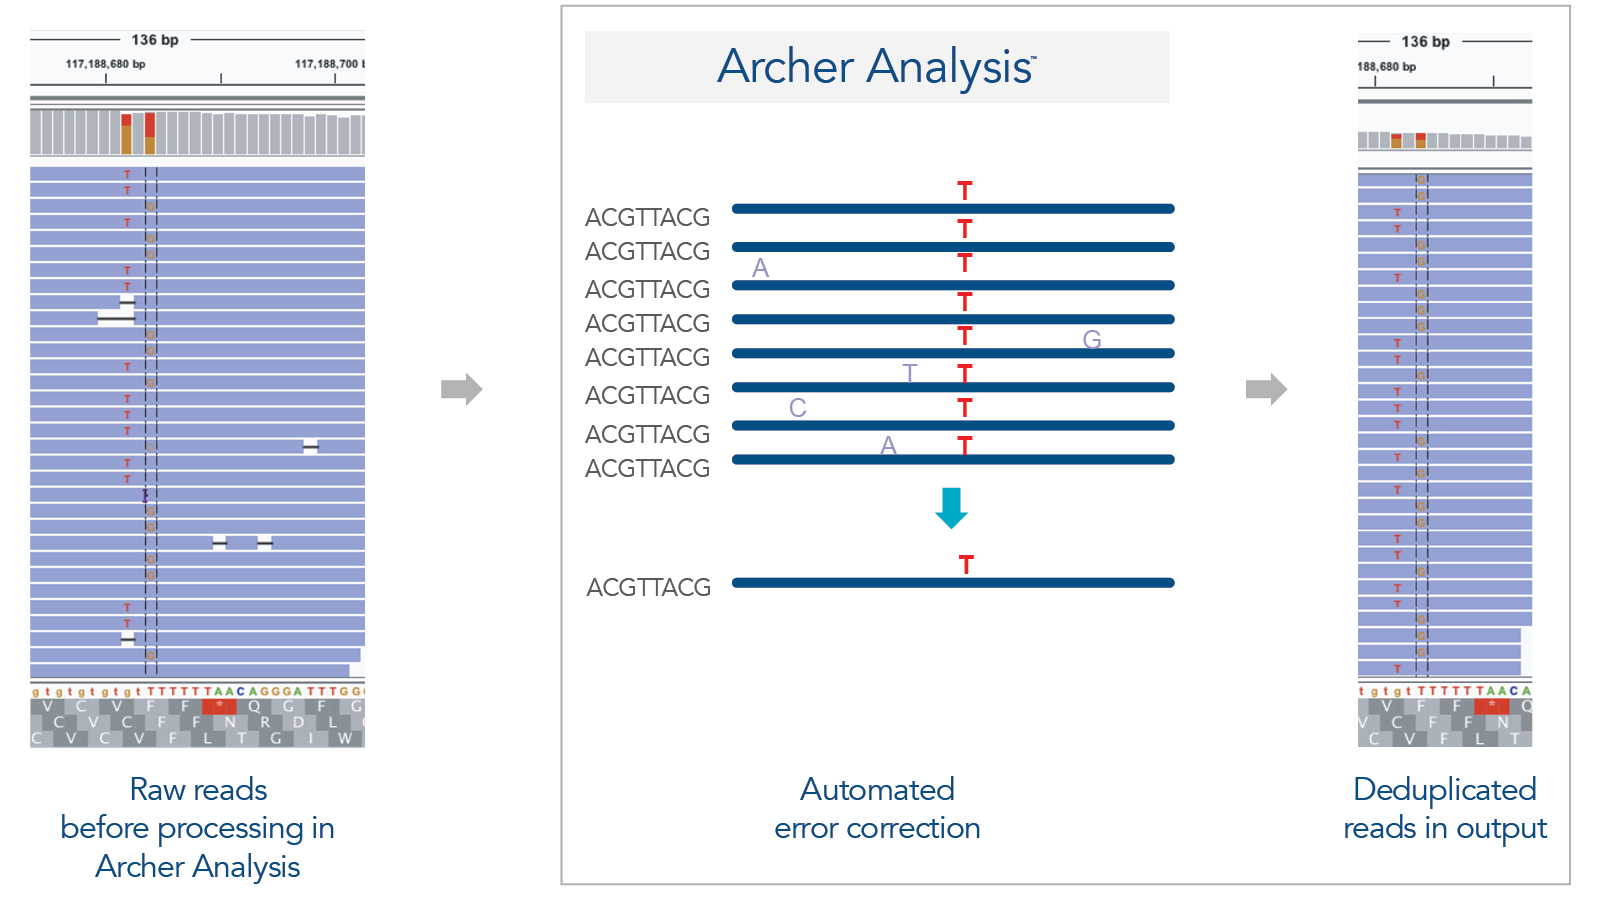 Archer Analysis automatically deduplicates reads